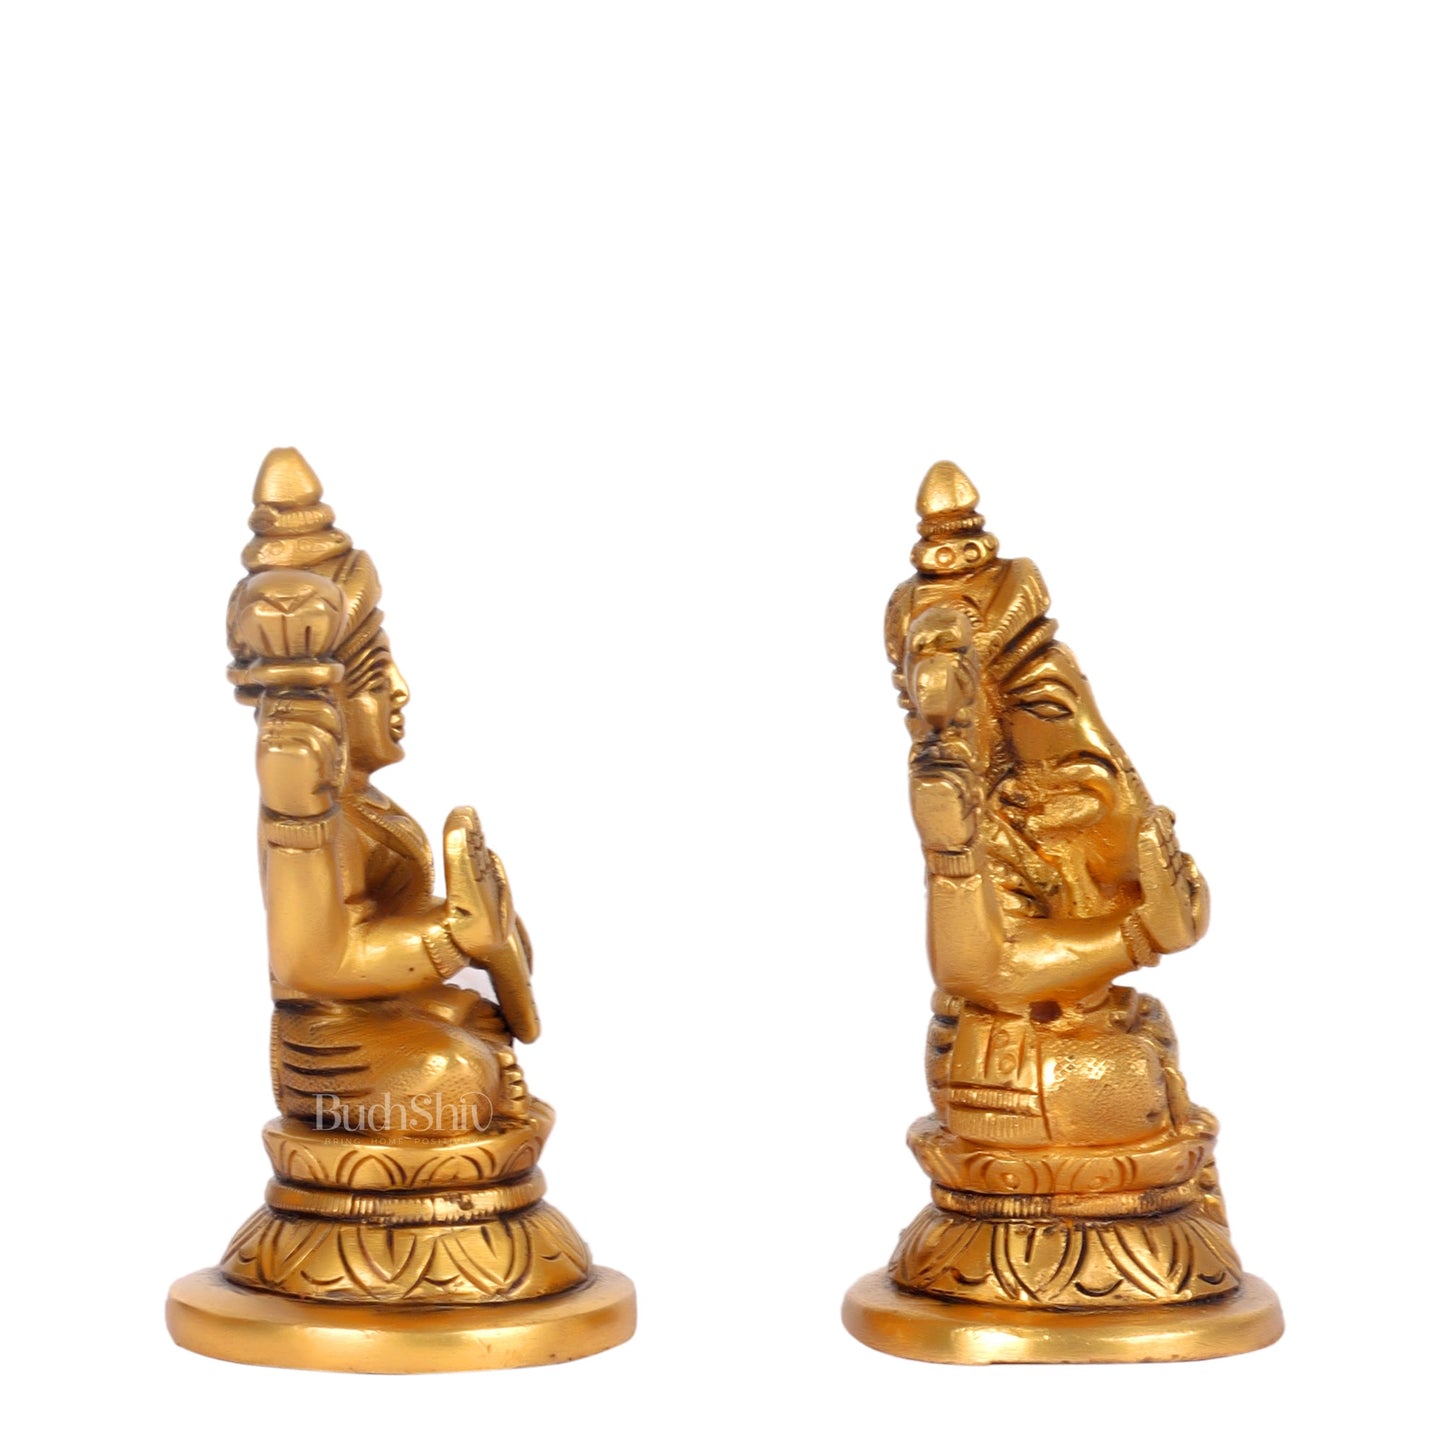 Superfine Brass Ganesha and Lakshmi Idols for Home Temples - Budhshiv.com